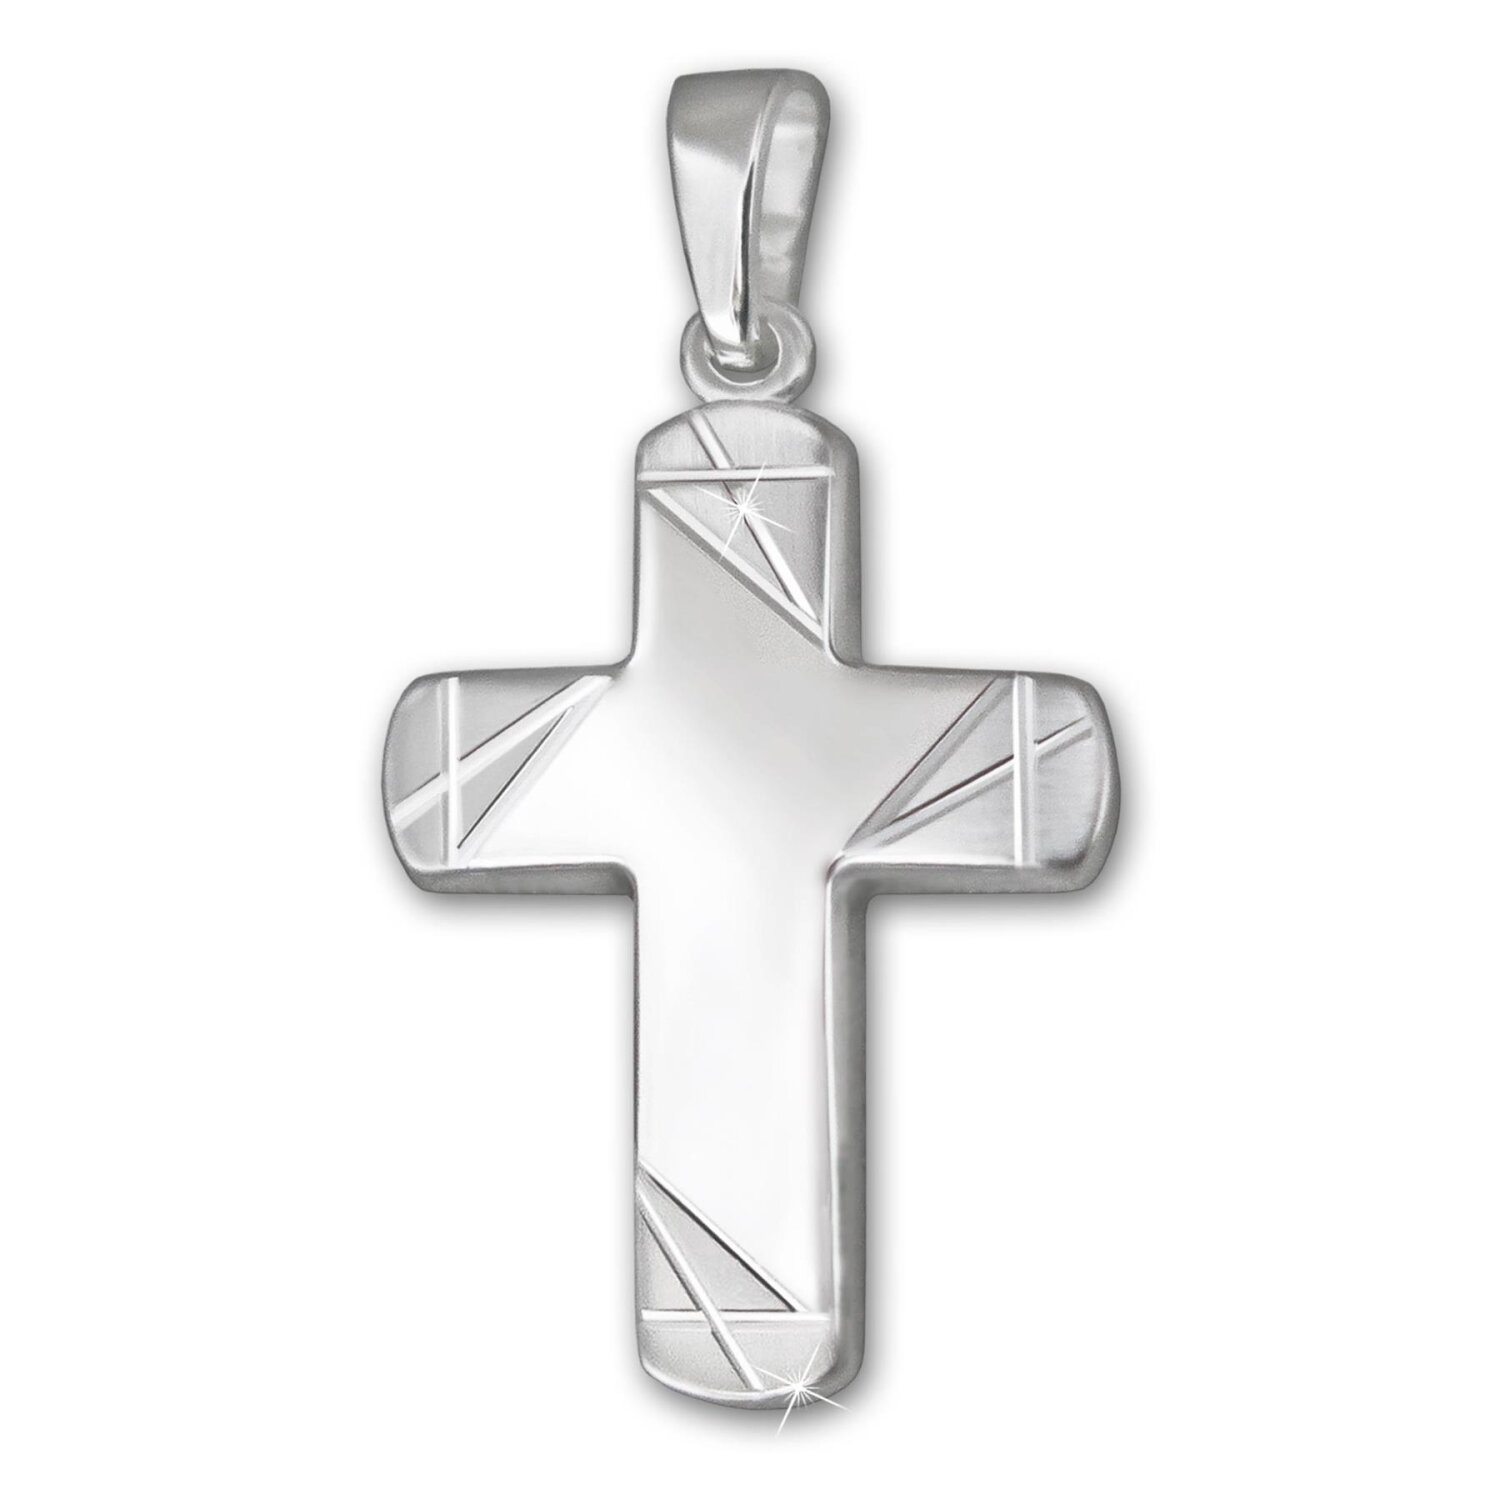 Silbernes Kreuz 20 mm breite Balken, innen gl&auml;nzend, Kreuzenden matt verziert mit Linien gekreuzt gemustert SILBER 925